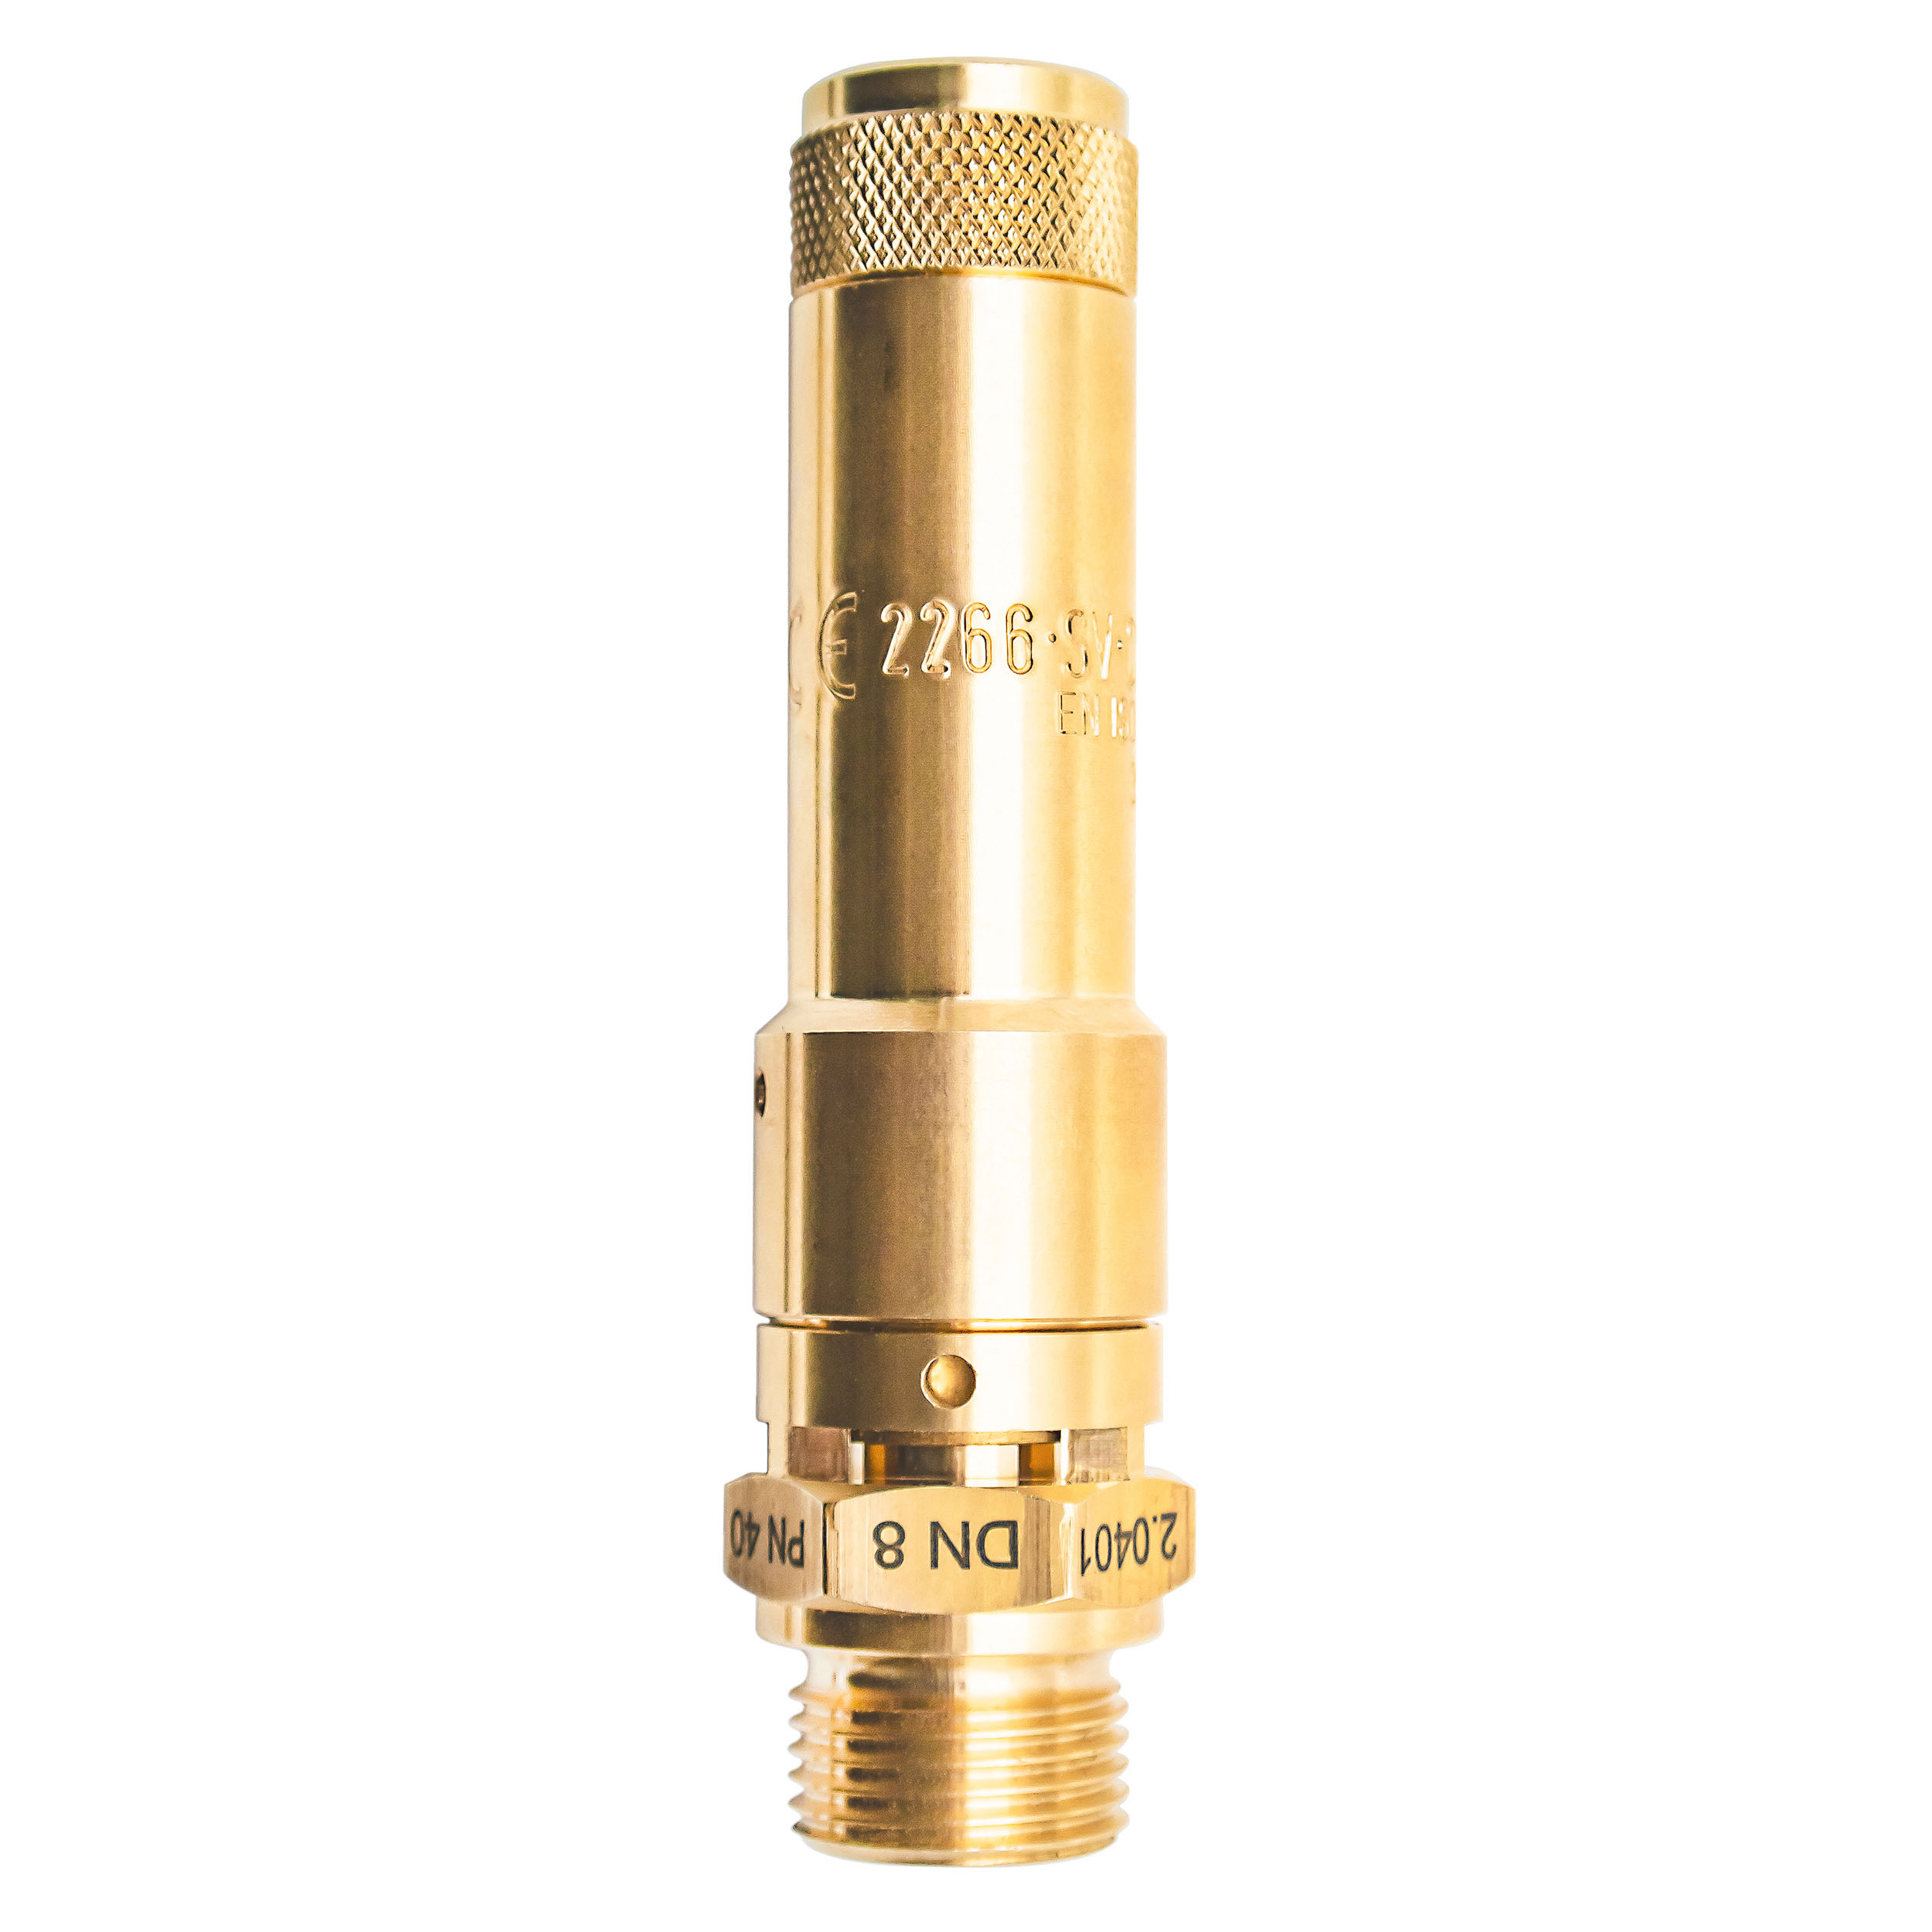 Component-tested safety valve DN 8, G⅜, pressure: 1-1.5 bar